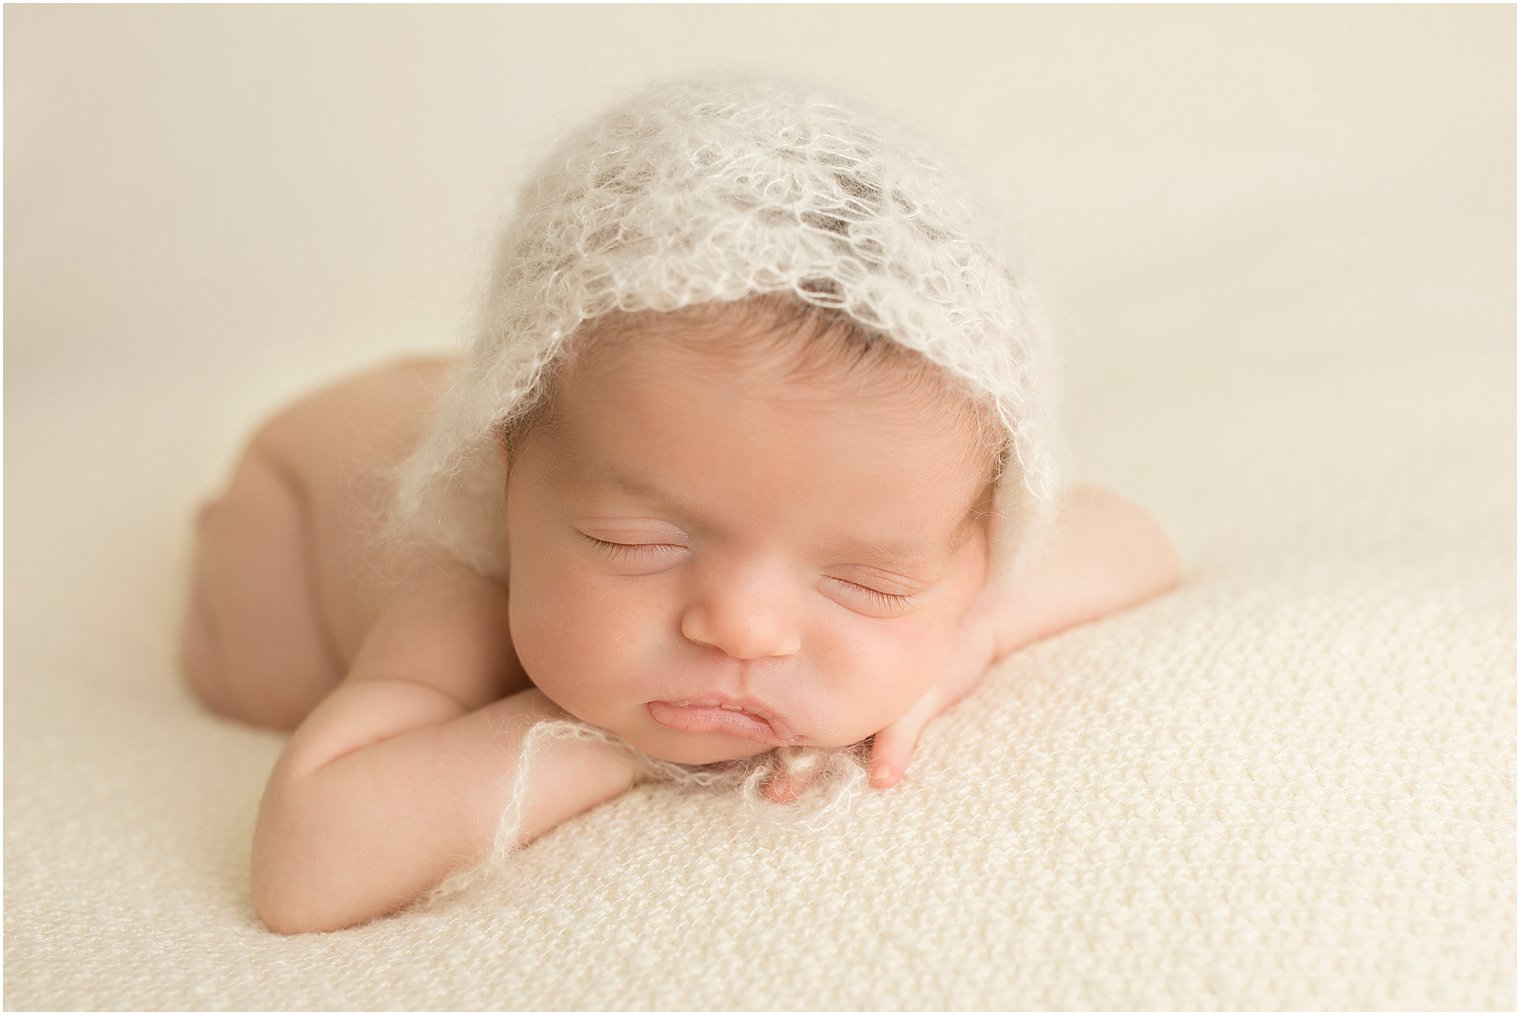 Sleeping newborn girl with cream knit bonnet